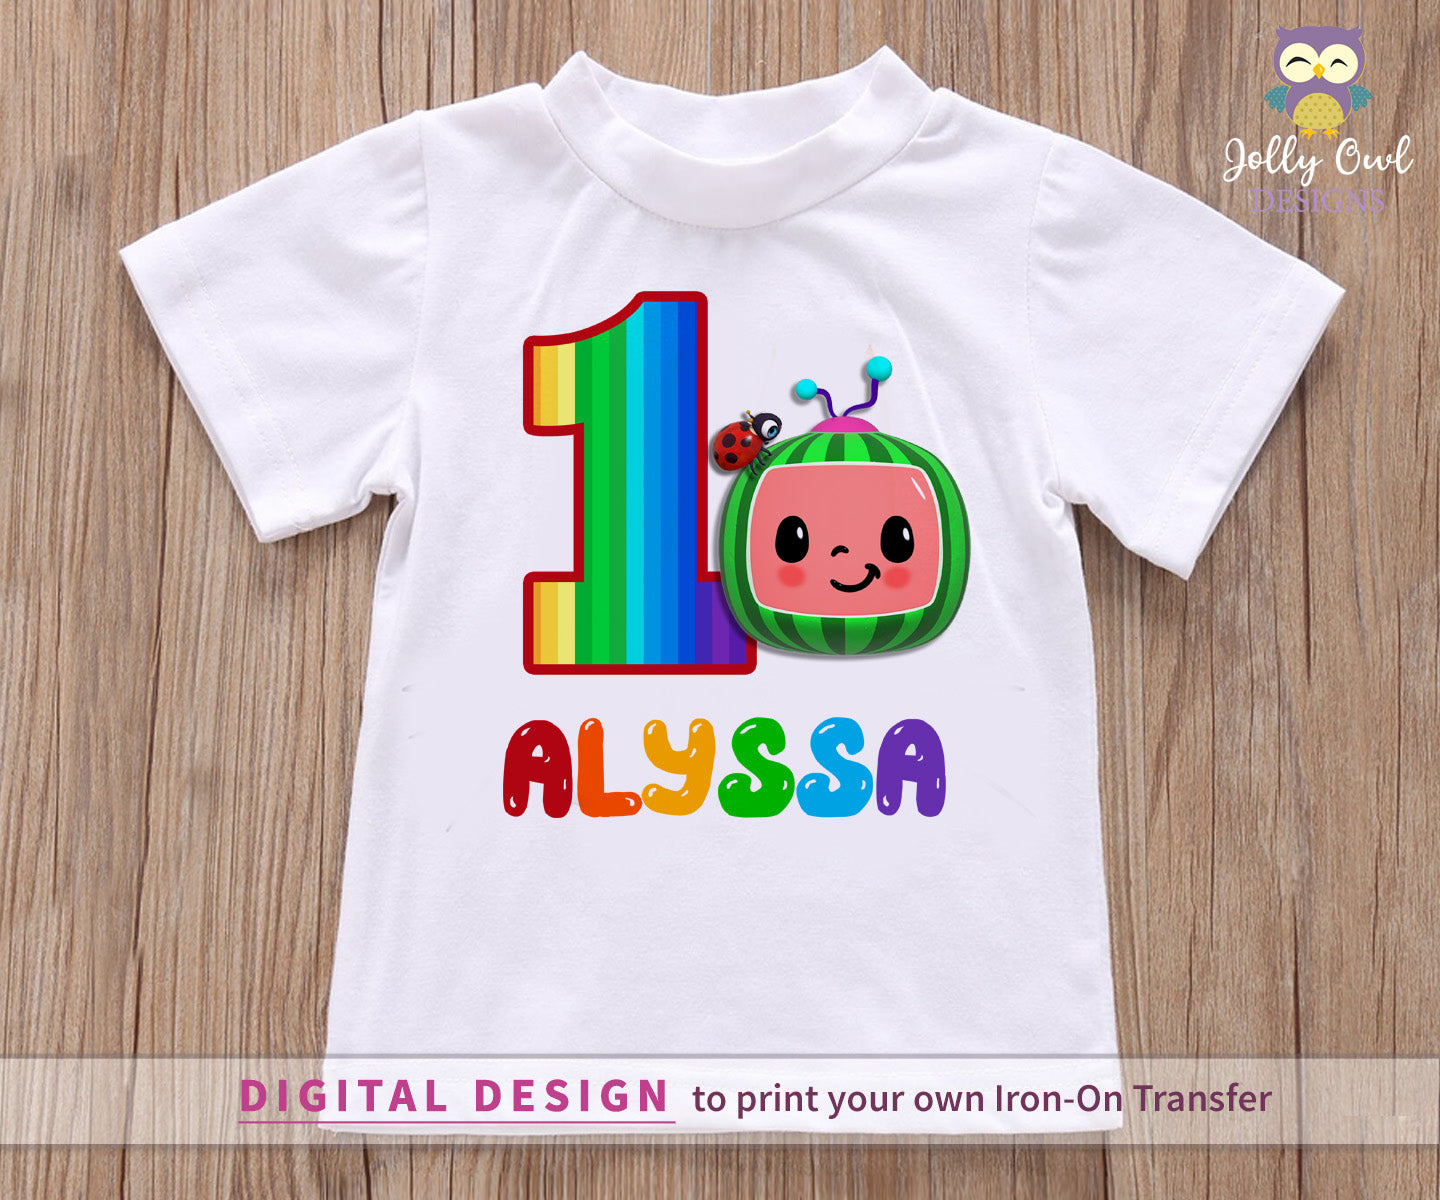 Birthday T-Shirt Design for Print